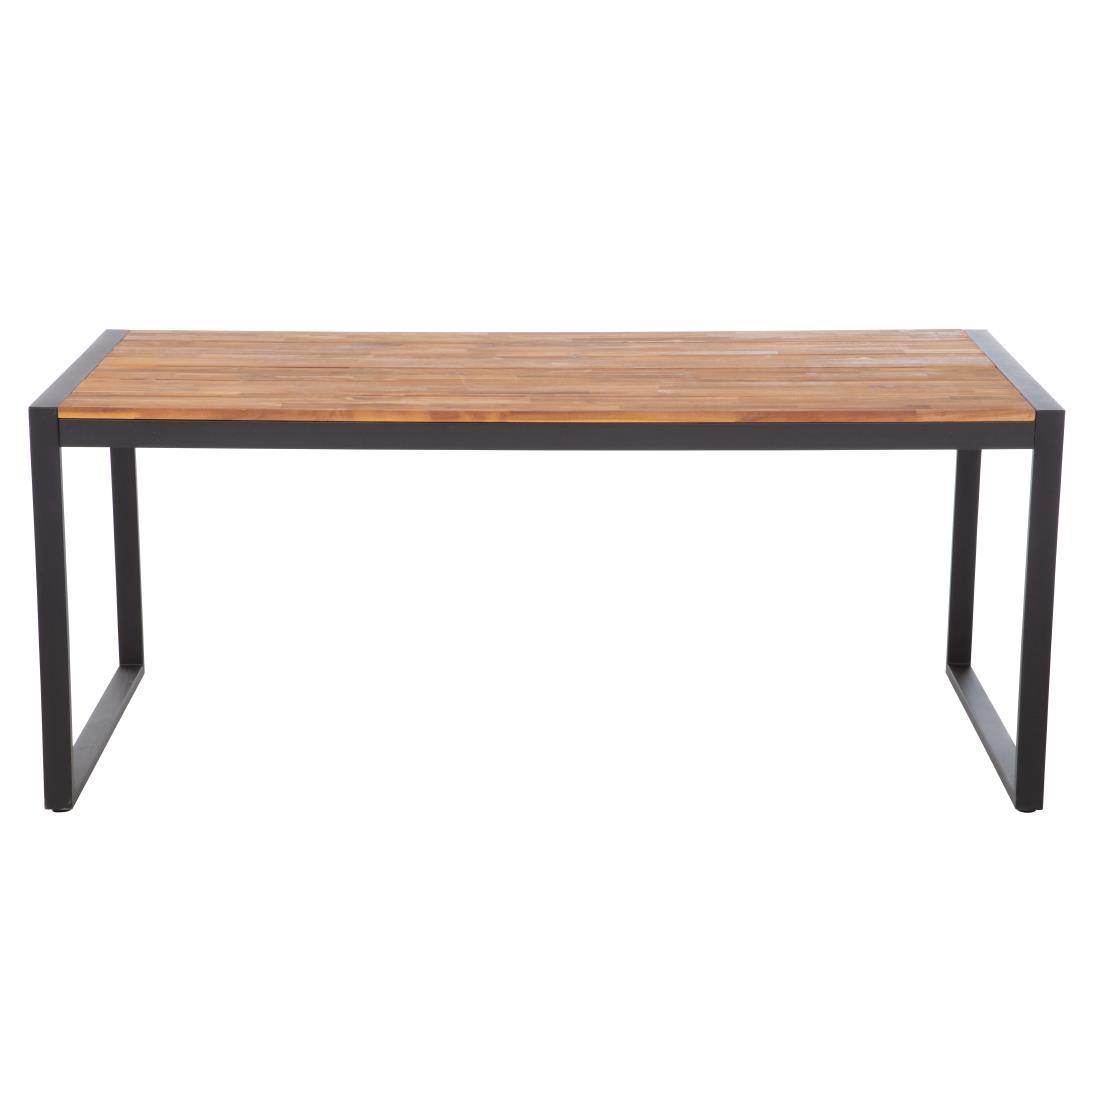 Bolero Acacia Wood and Steel Rectangular Industrial Table 1800mm - DS157  - 4